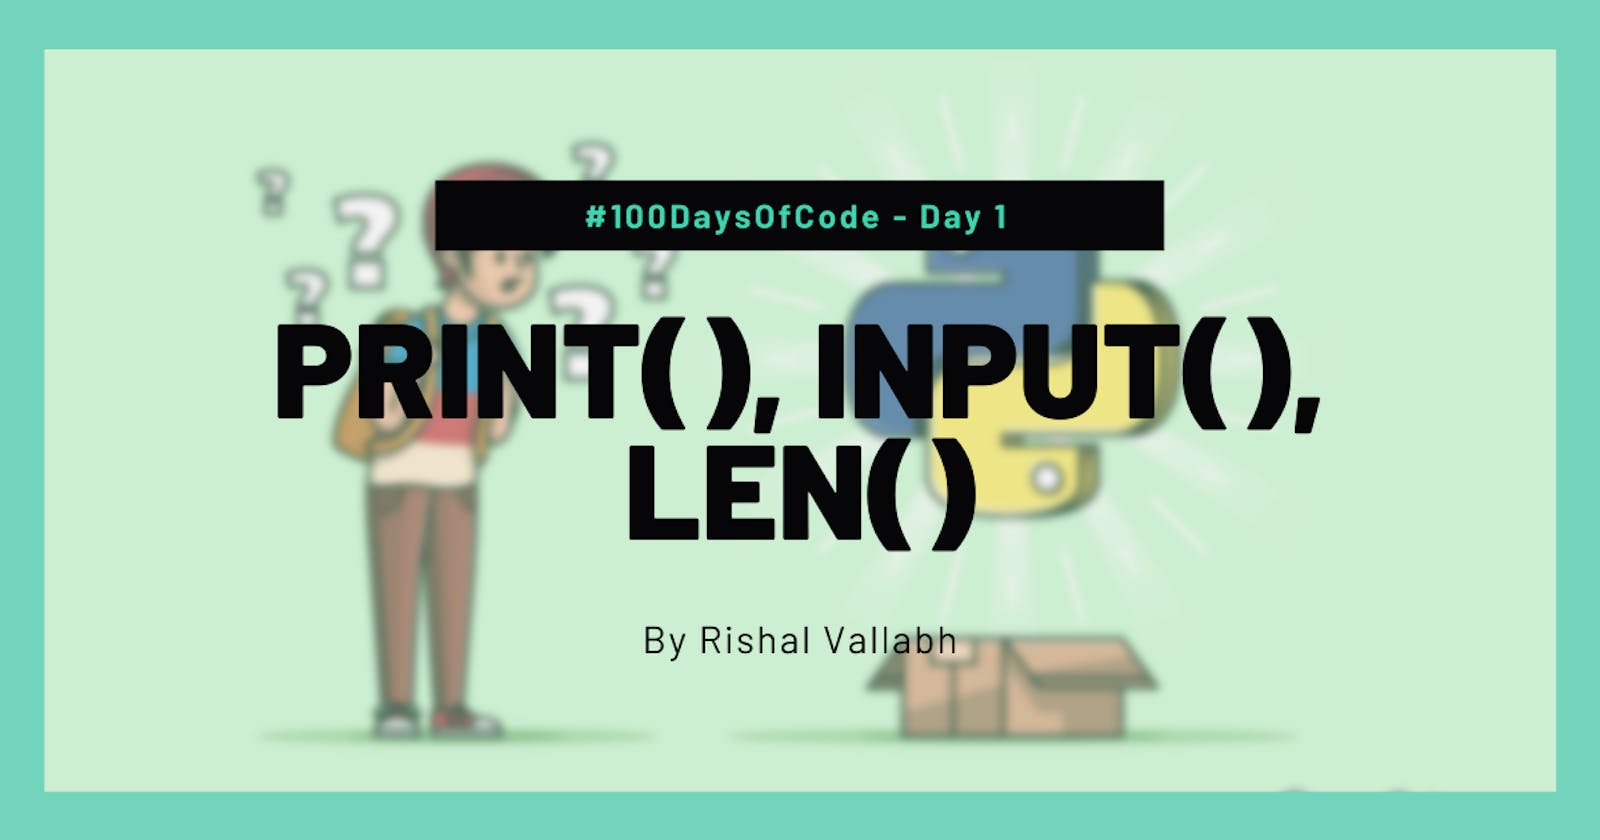 #100DaysOfCode: Python Day 1